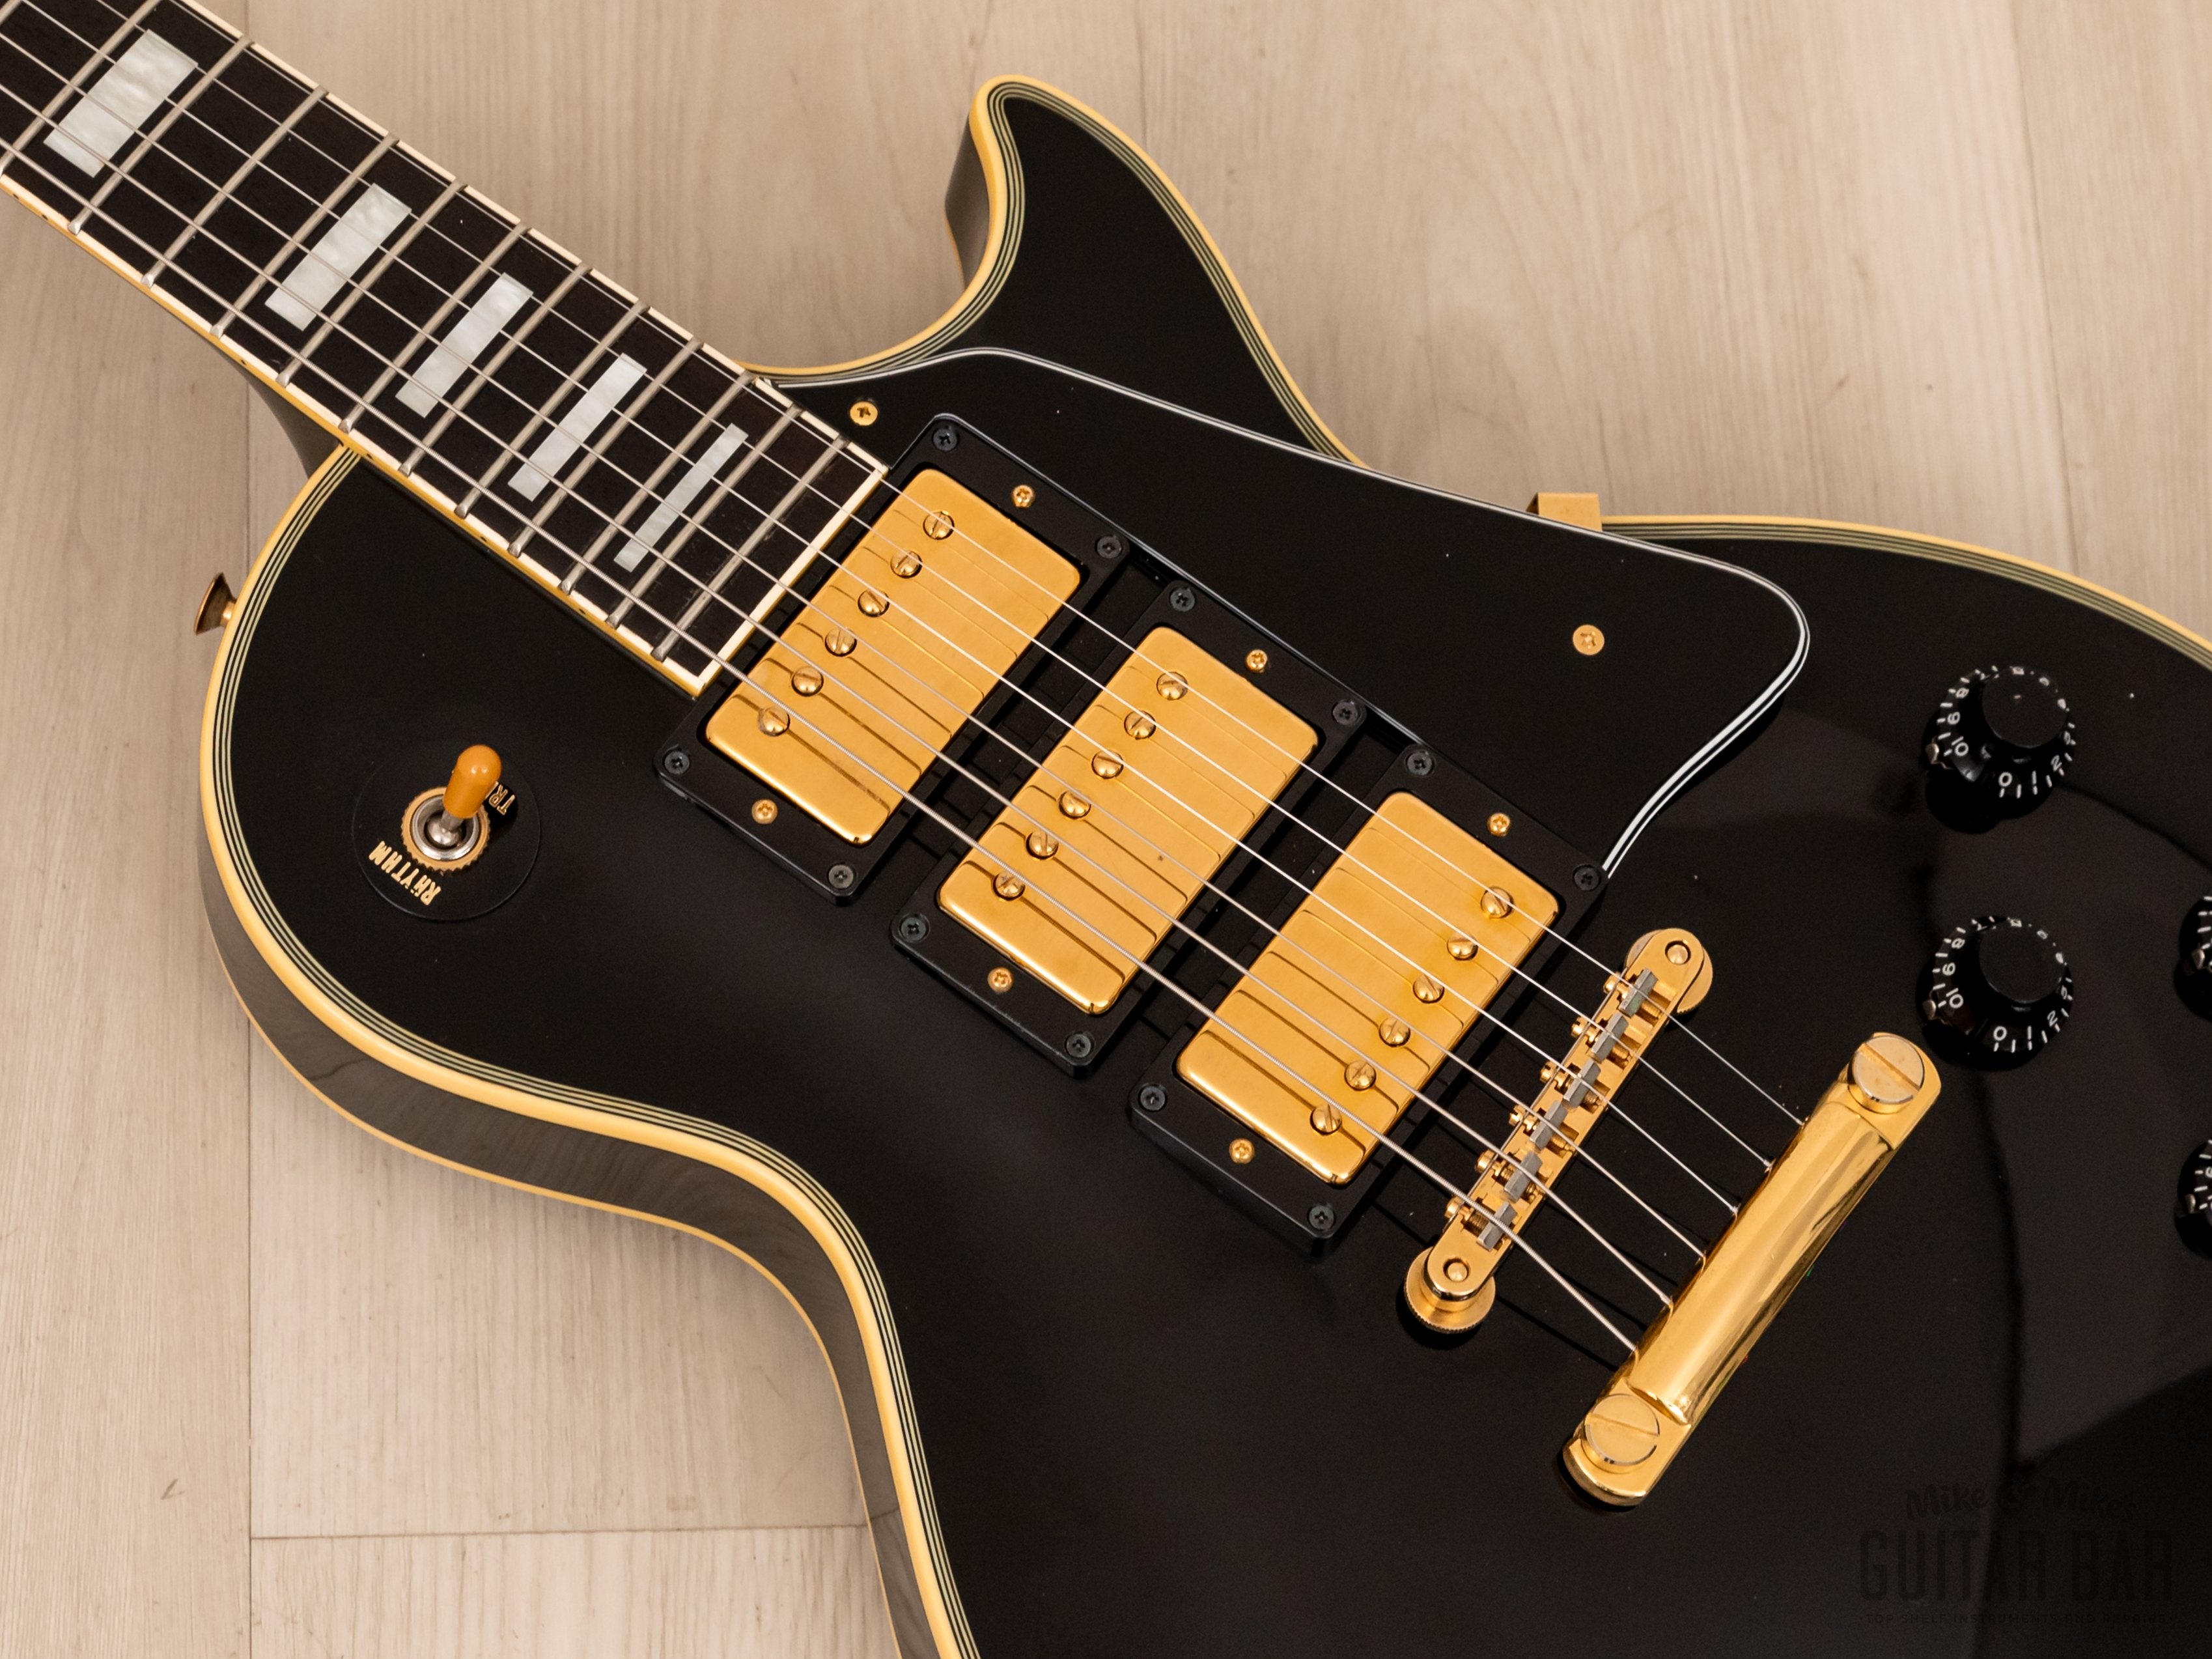 1990 Orville by Gibson Les Paul Custom 3 Pickup Black Beauty LPC-W/3PU Vintage Guitar w/ Hangtag, Japan